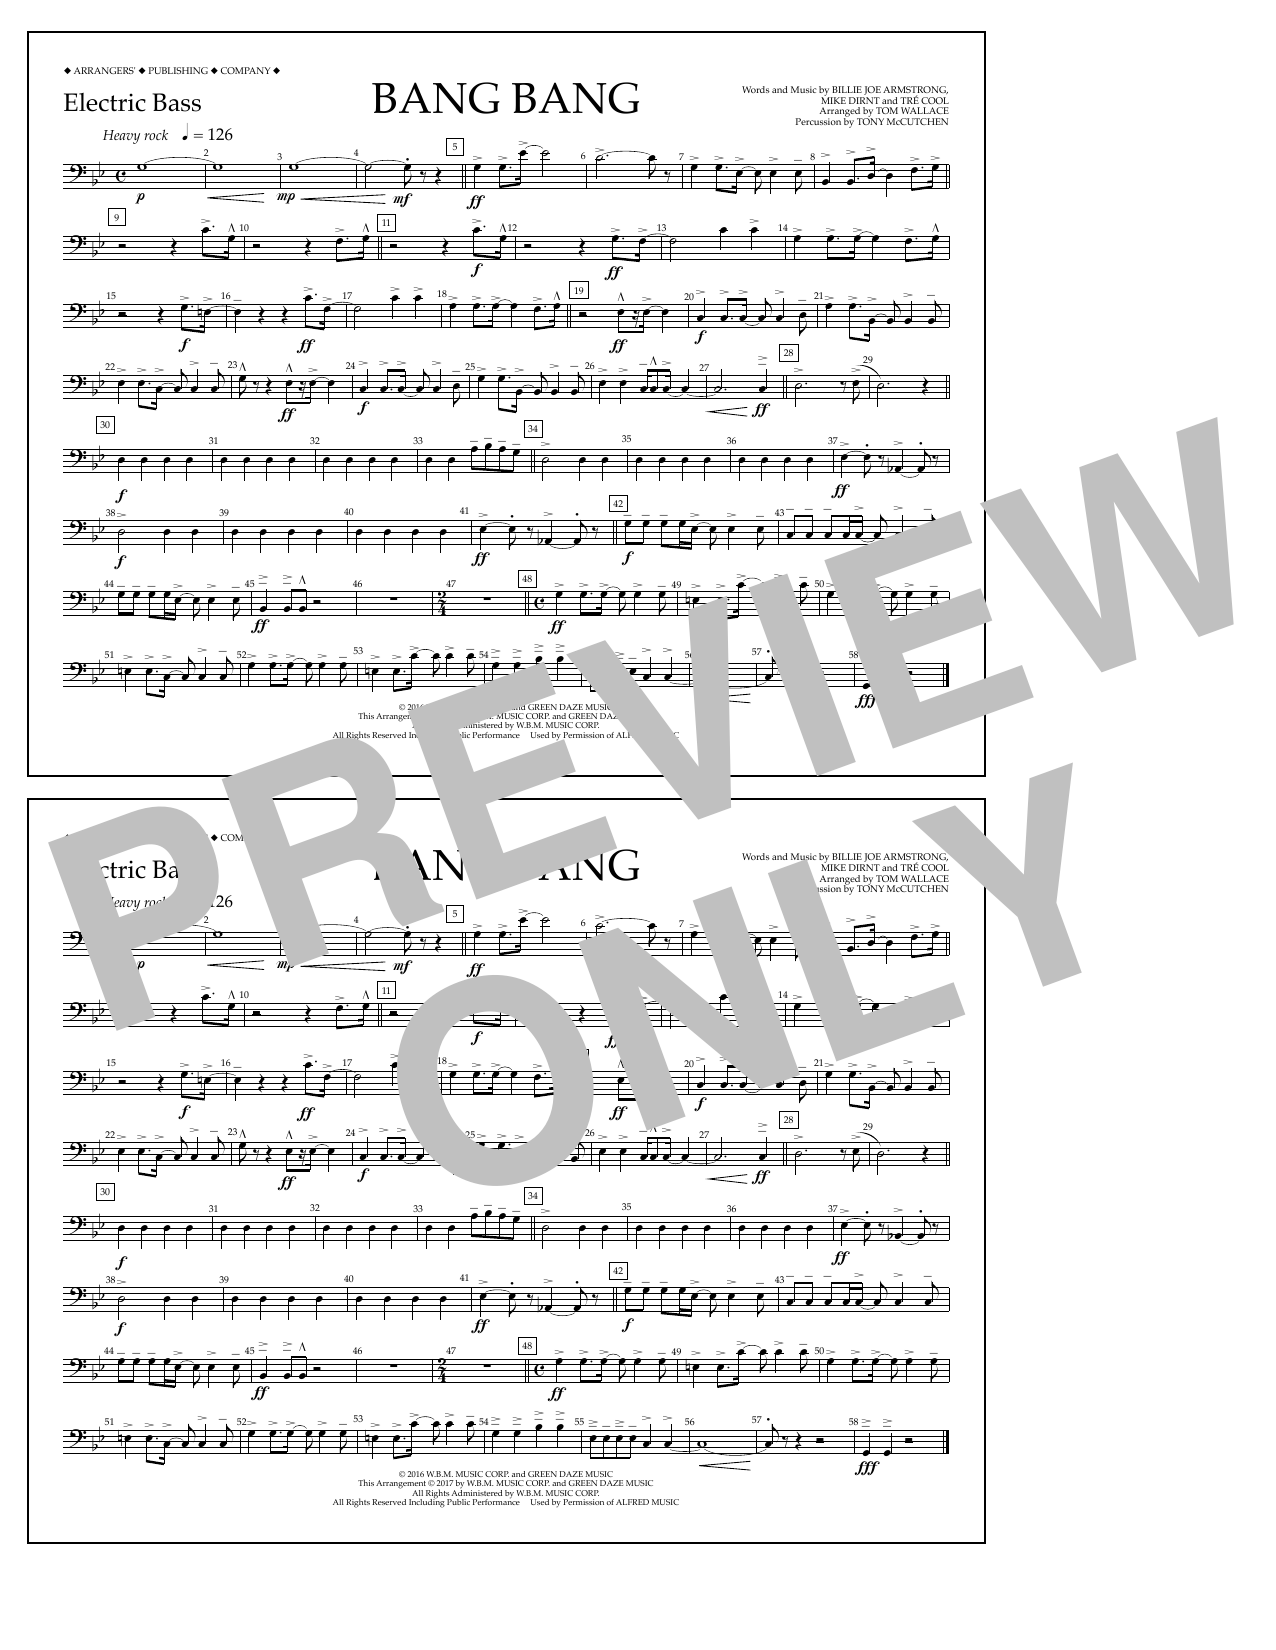 Tom Wallace Bang Bang - Electric Bass Sheet Music Notes & Chords for Marching Band - Download or Print PDF